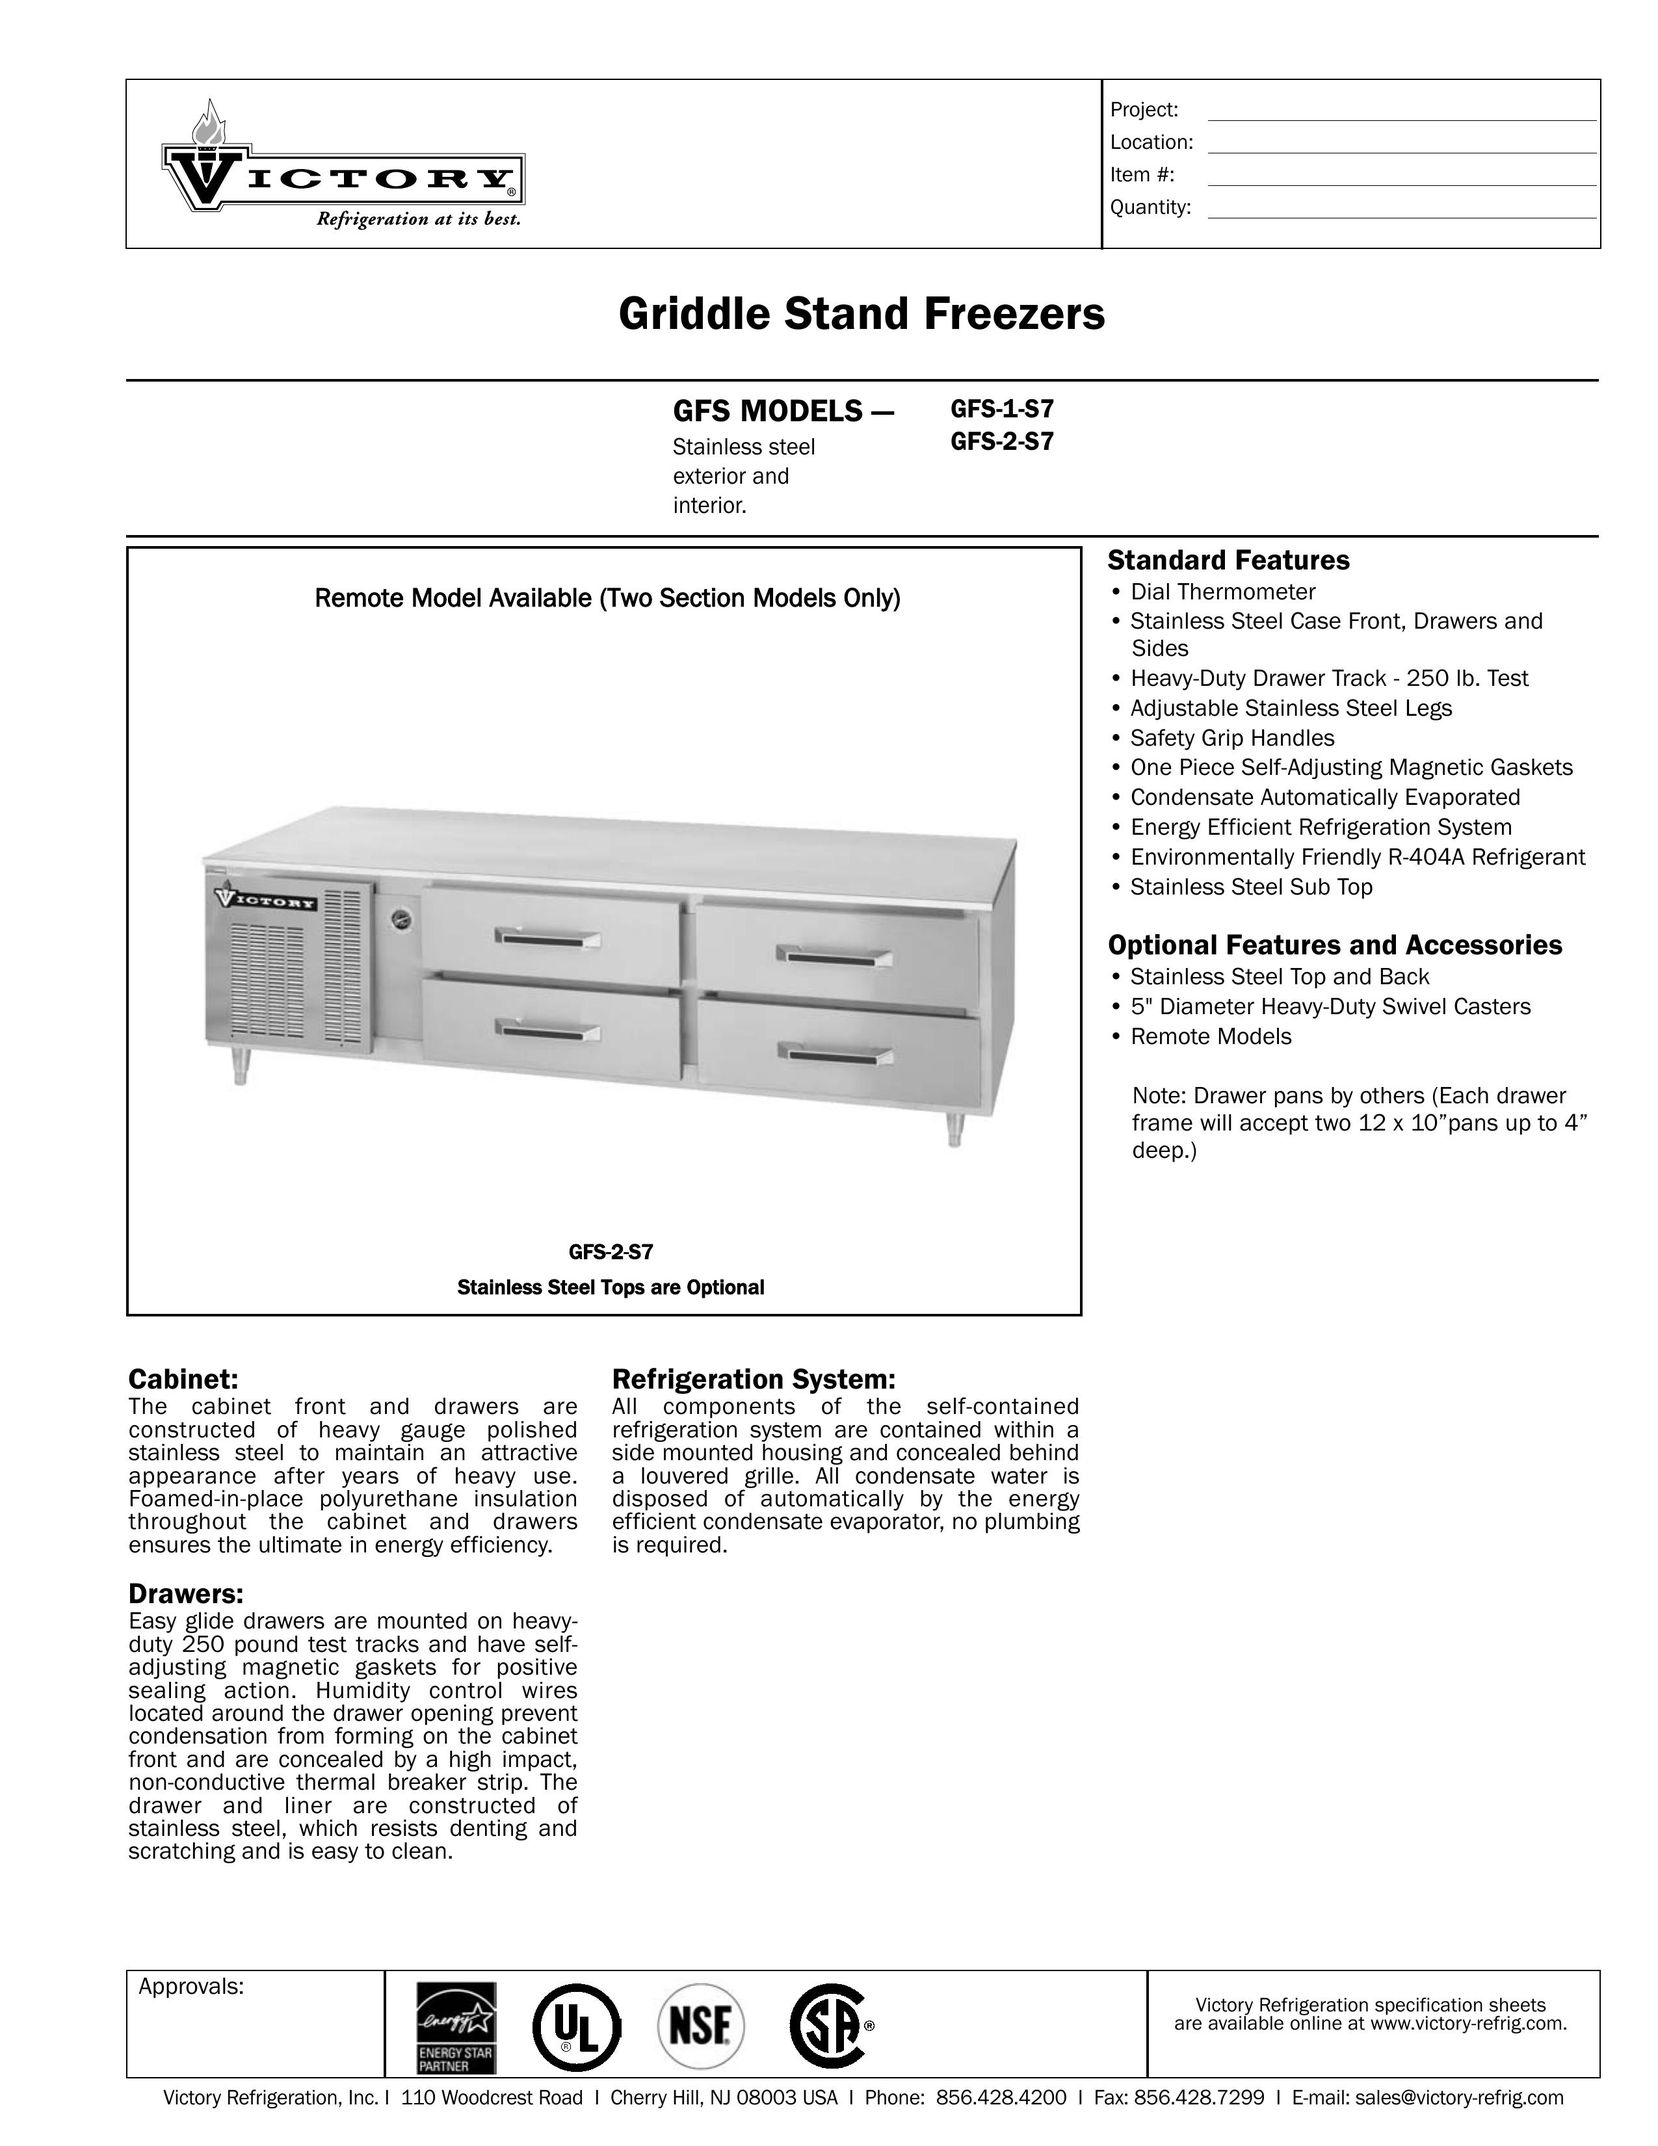 Victory Refrigeration GFS-2-S7 Freezer User Manual